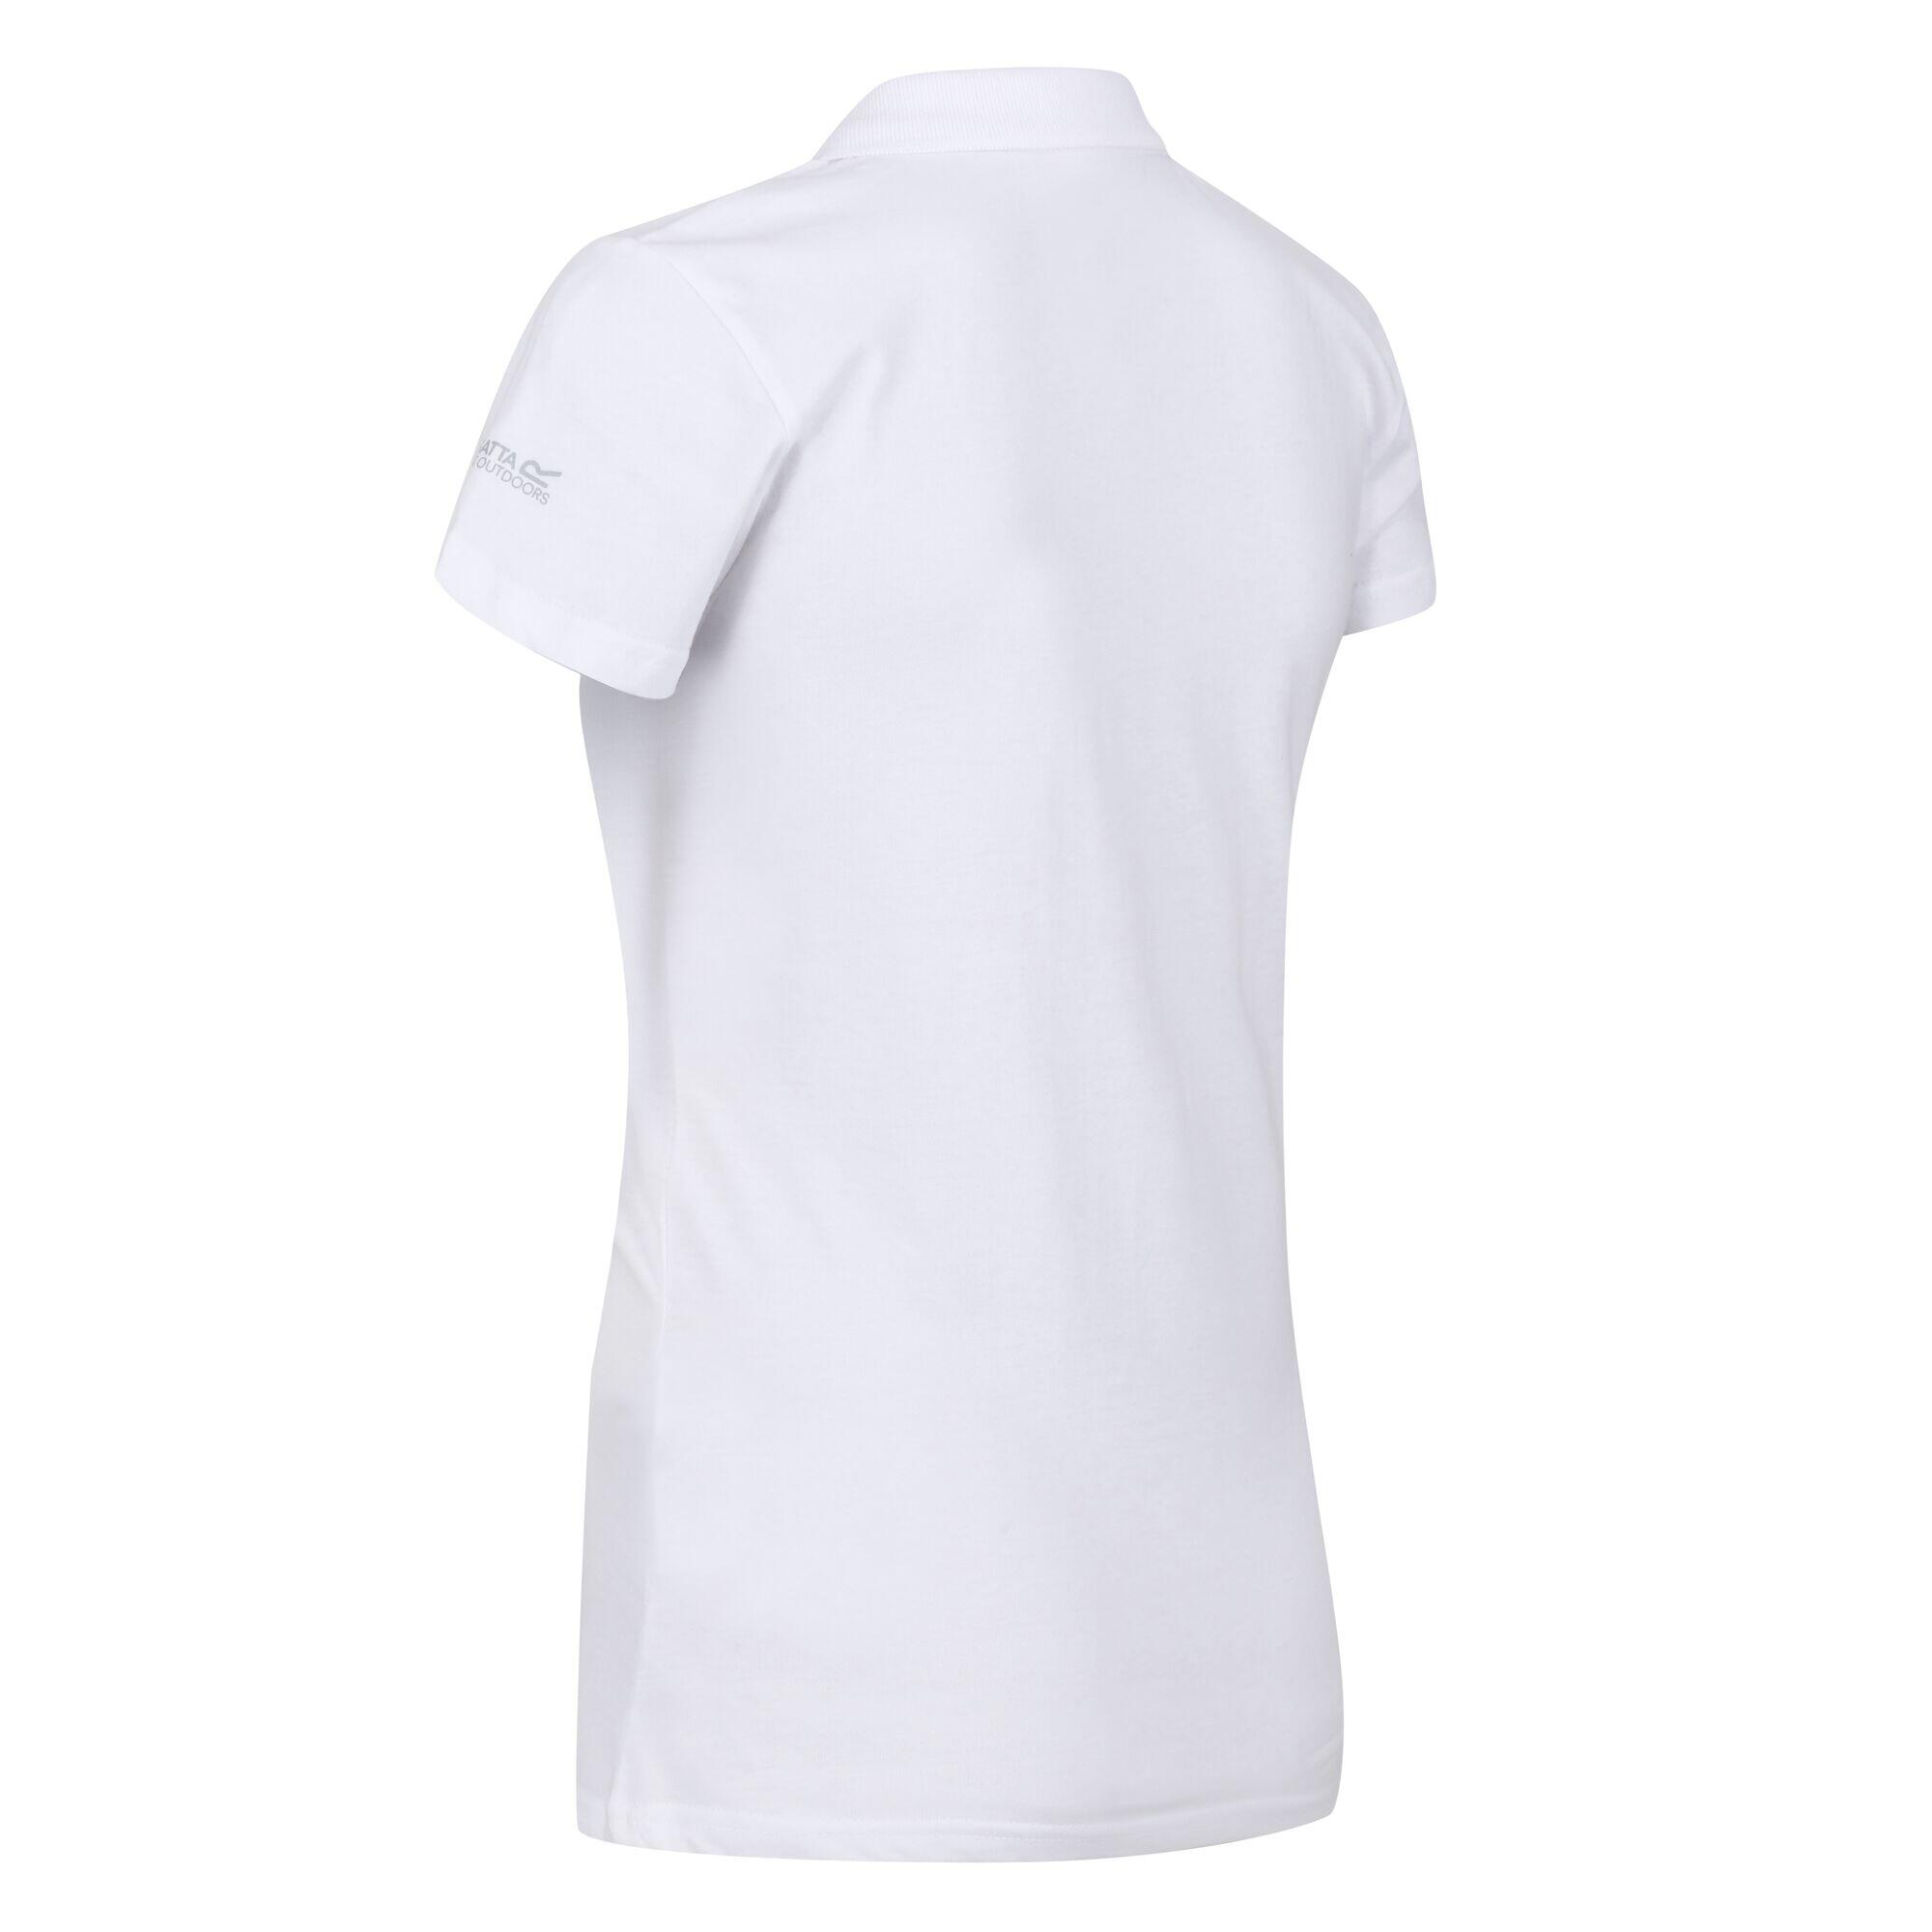 Sinton Women's Fitness T-Shirt - White 5/5